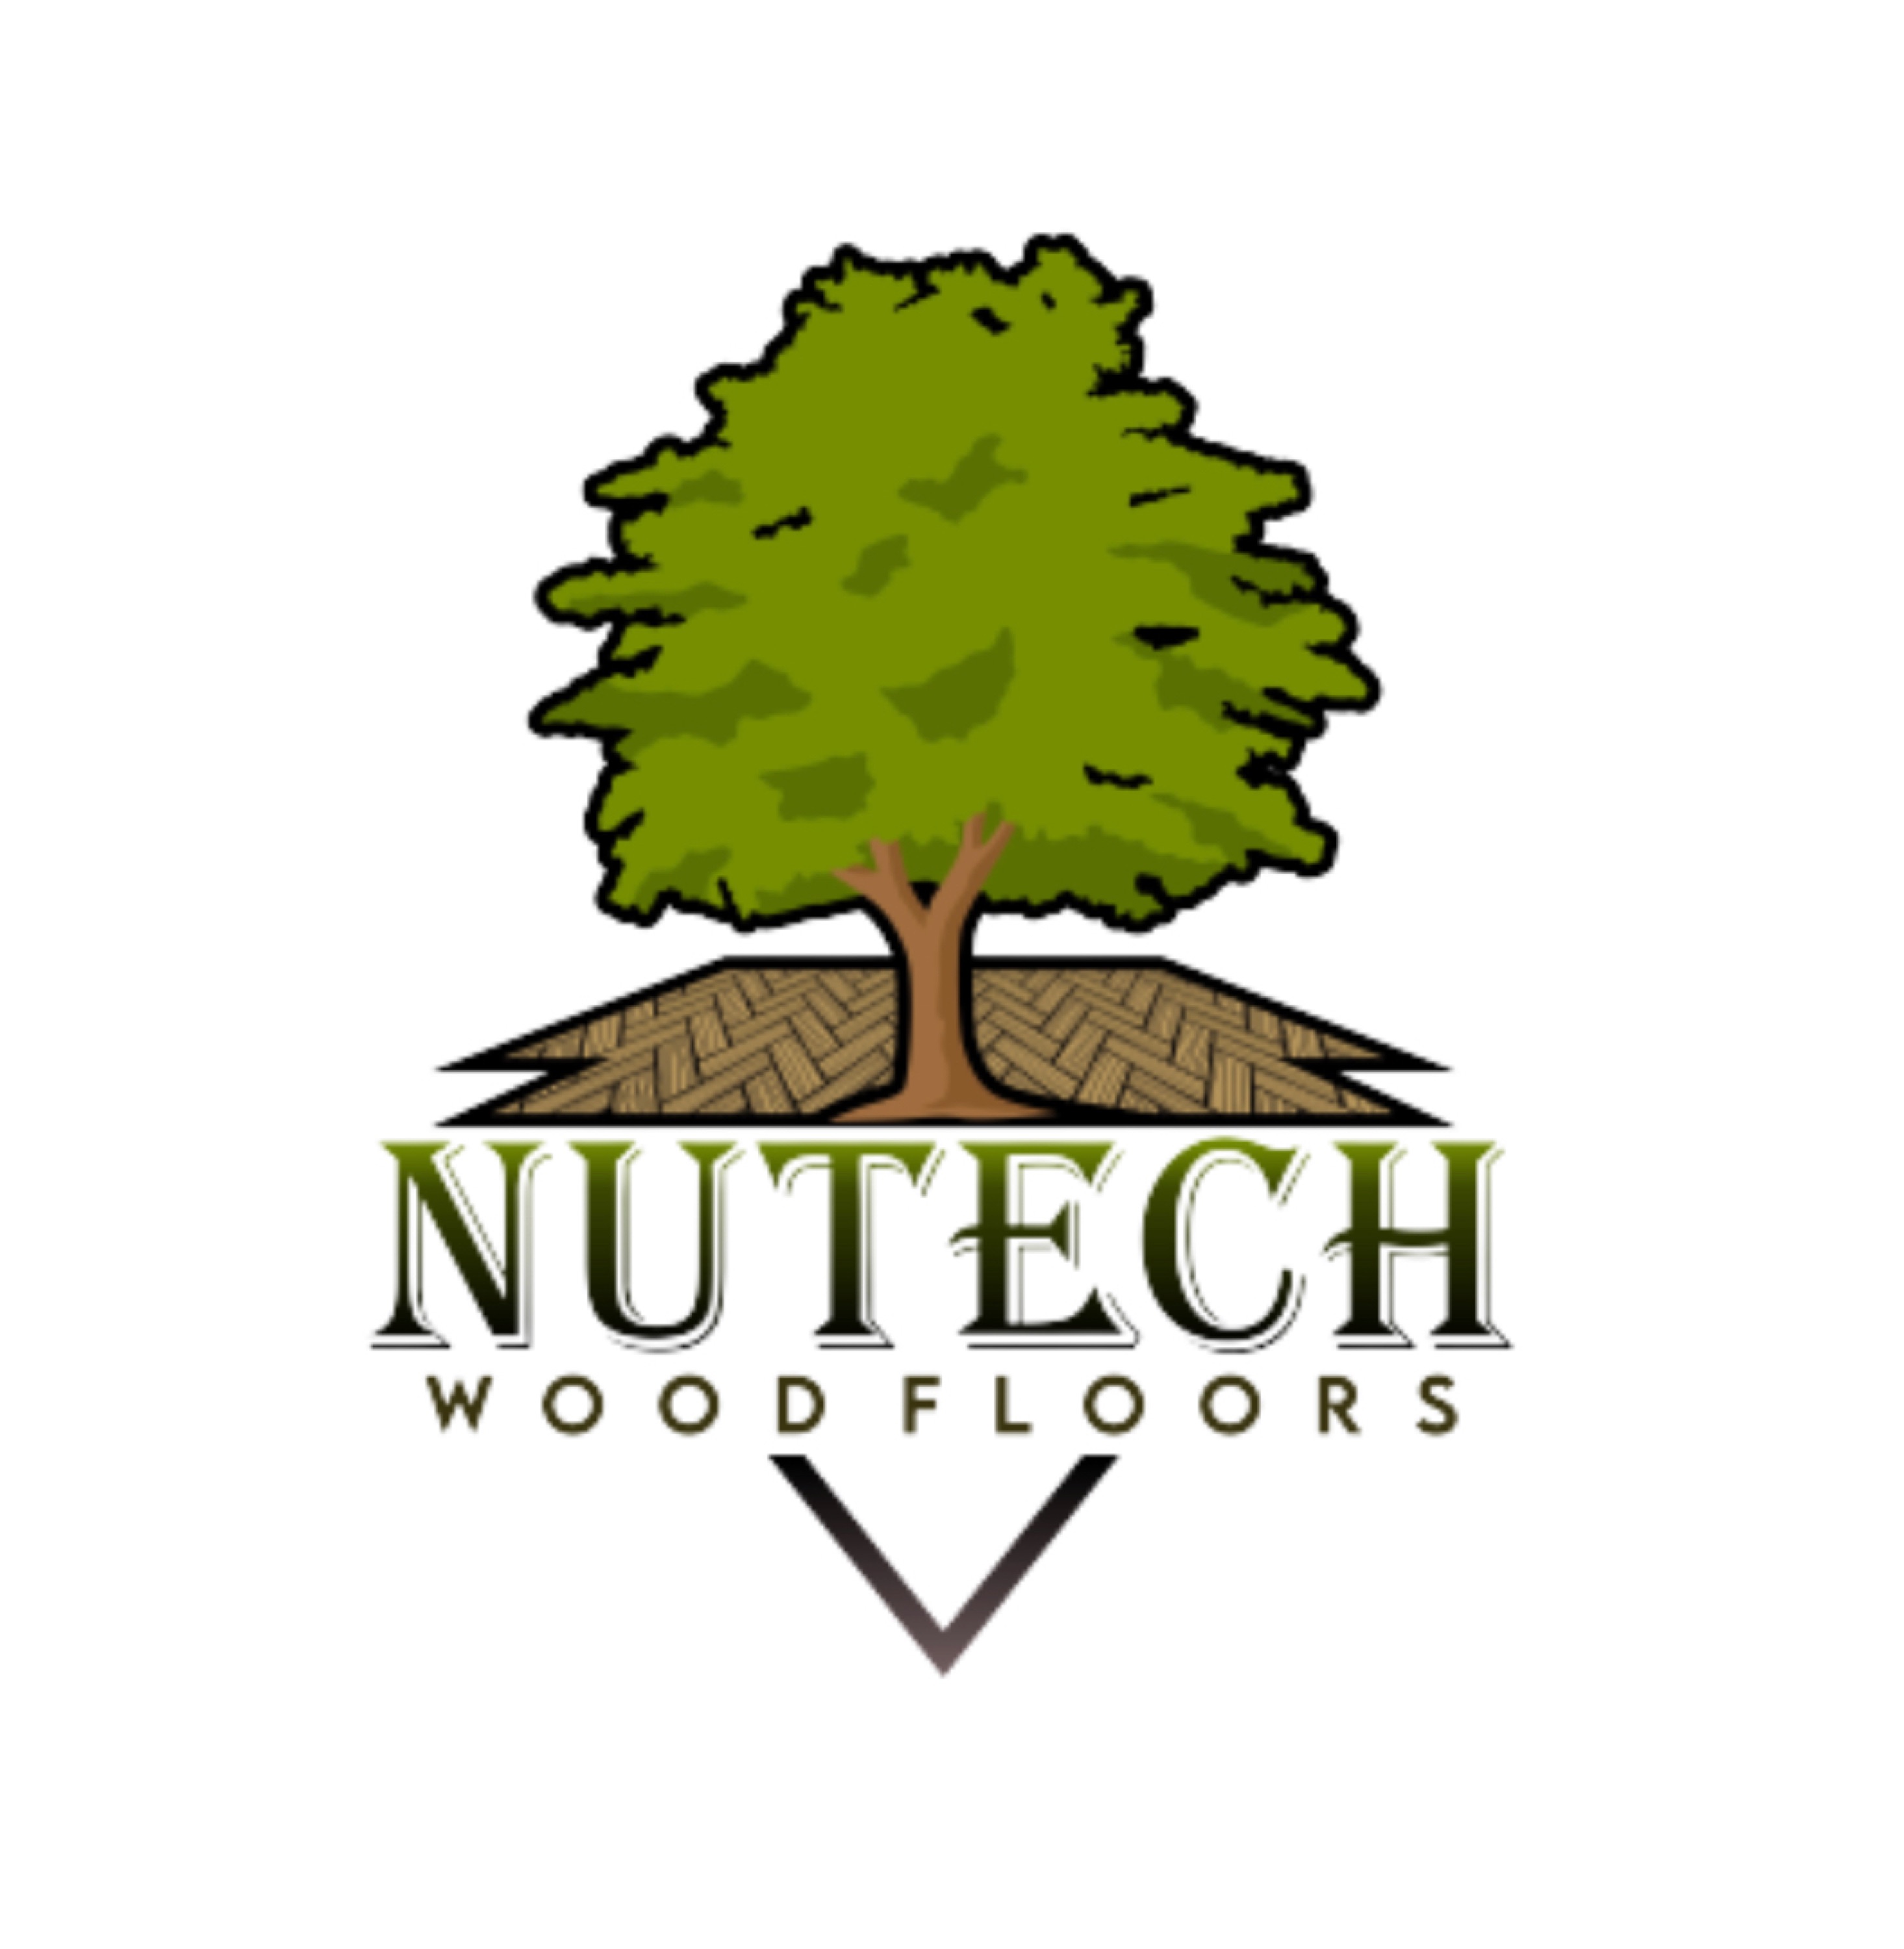 Nutech wood floors Logo